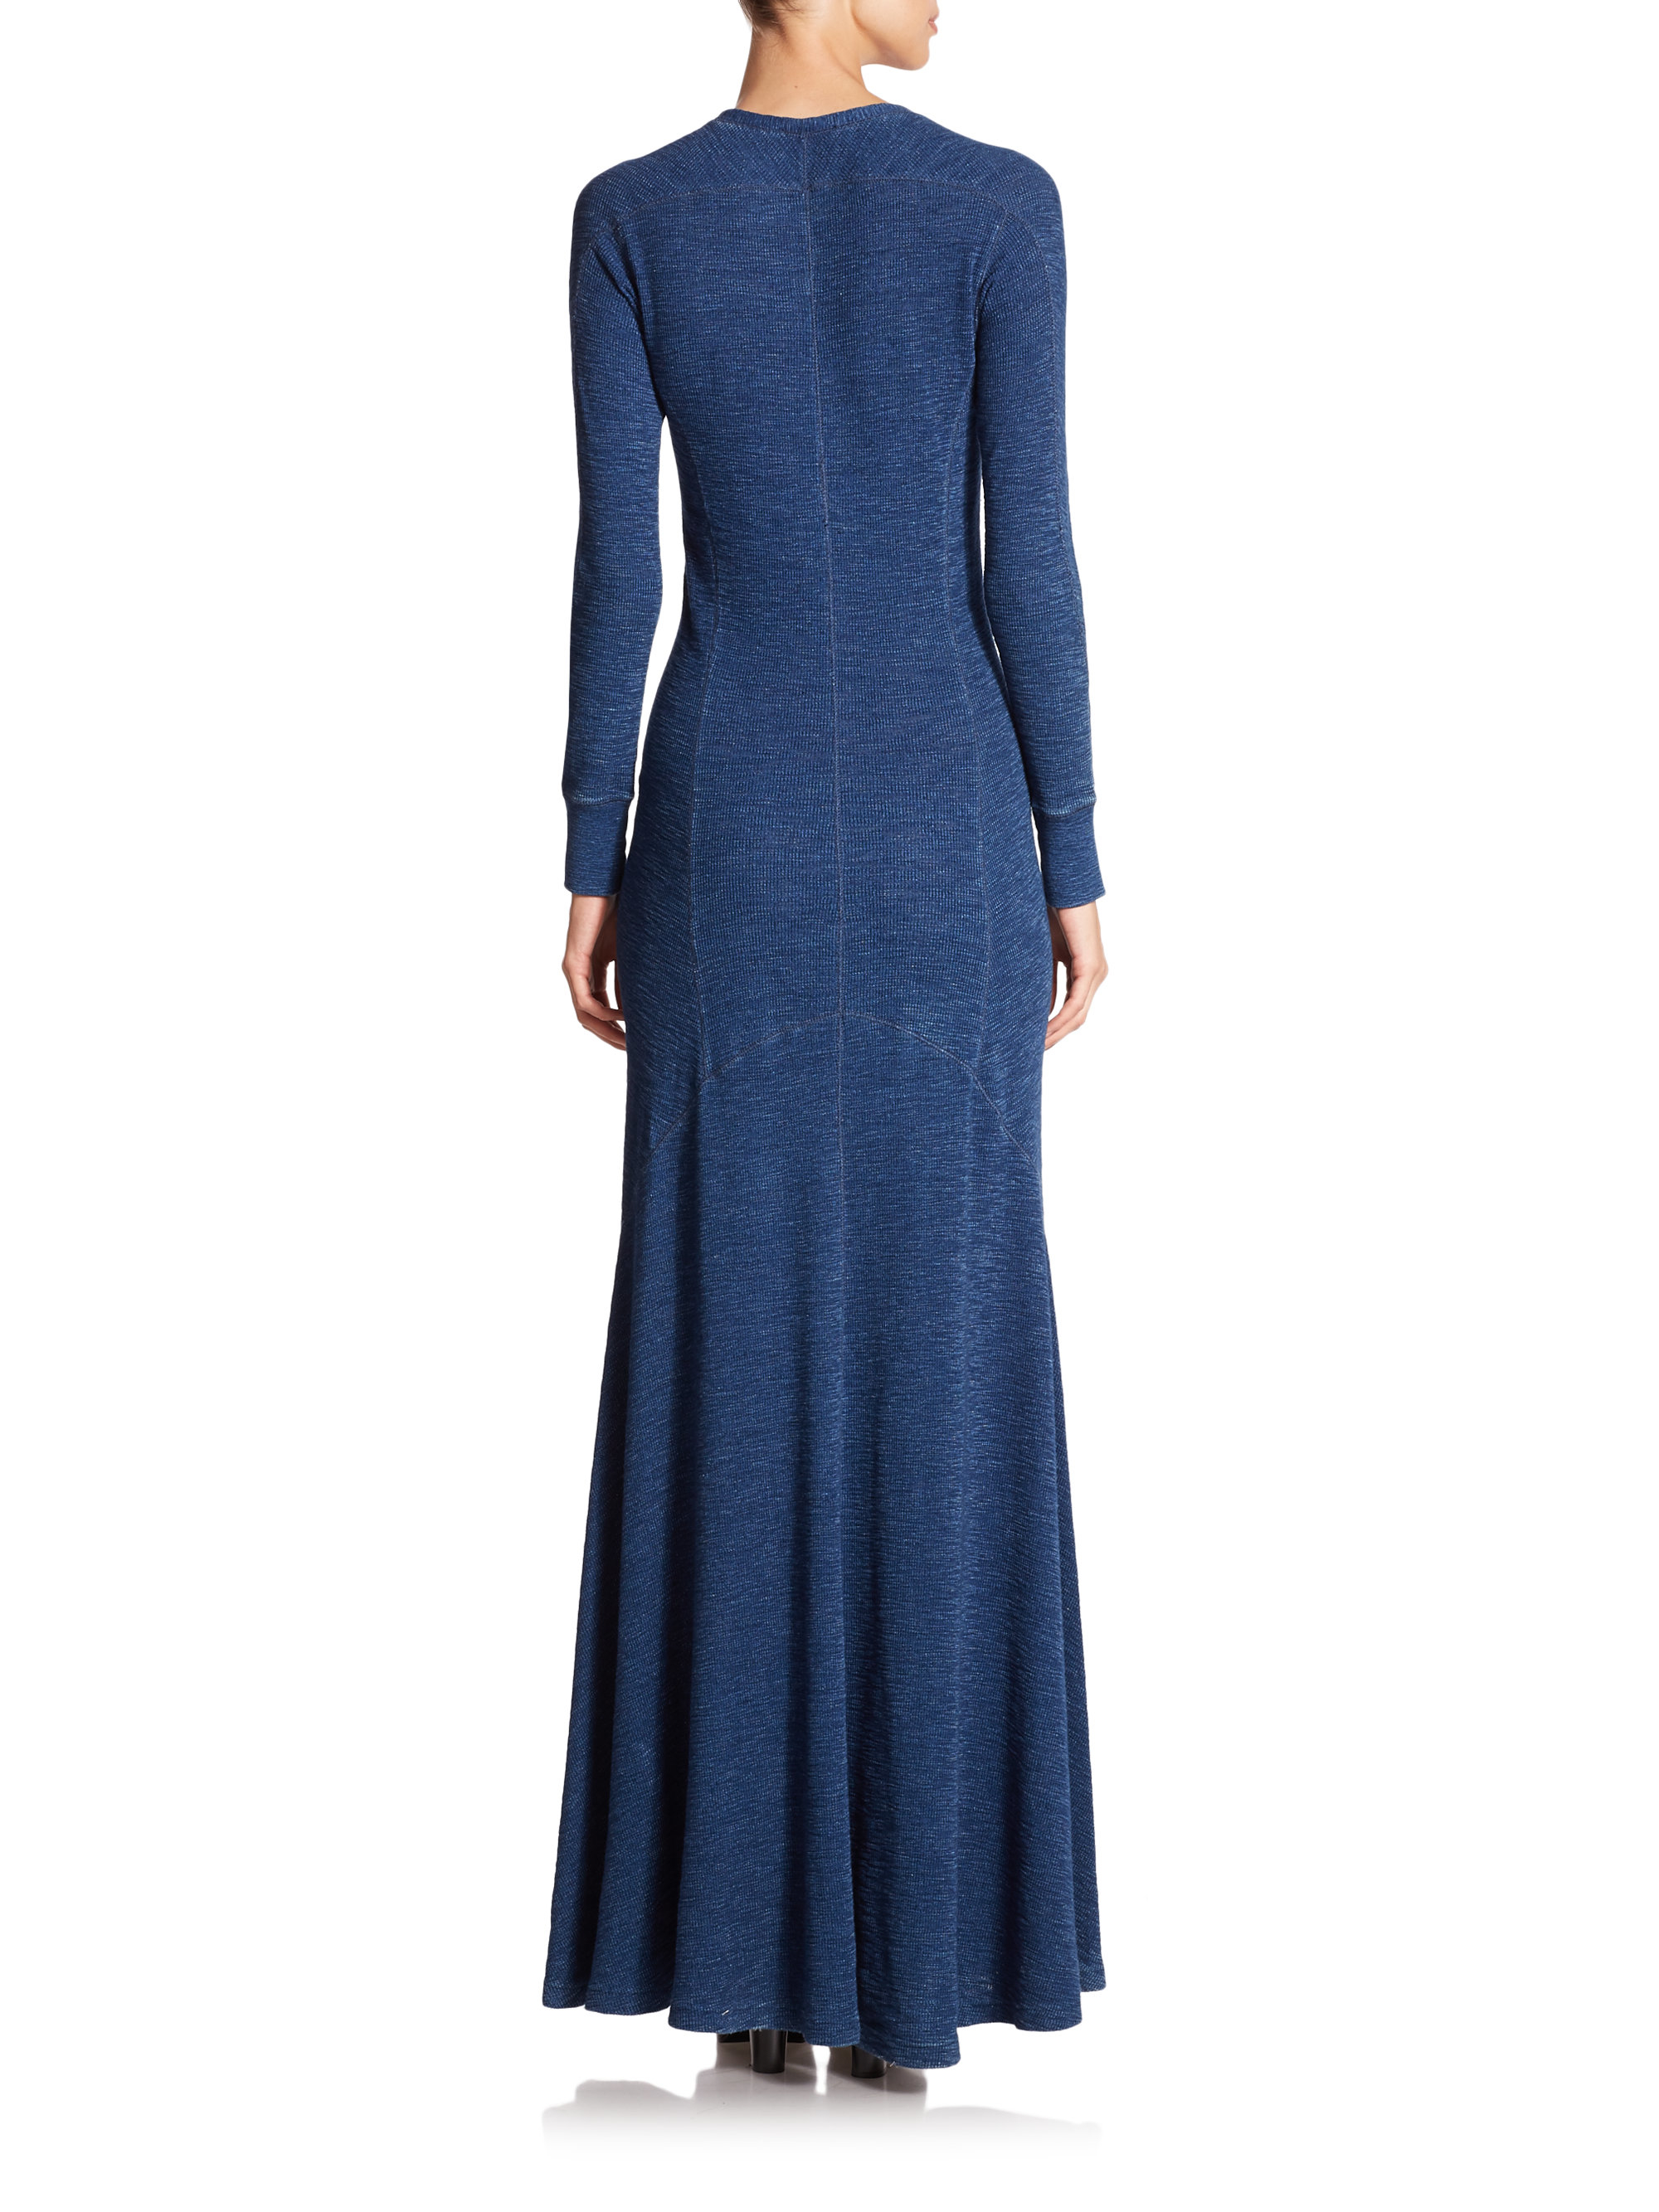 Lyst - Polo Ralph Lauren Cotton Maxi Dress in Blue